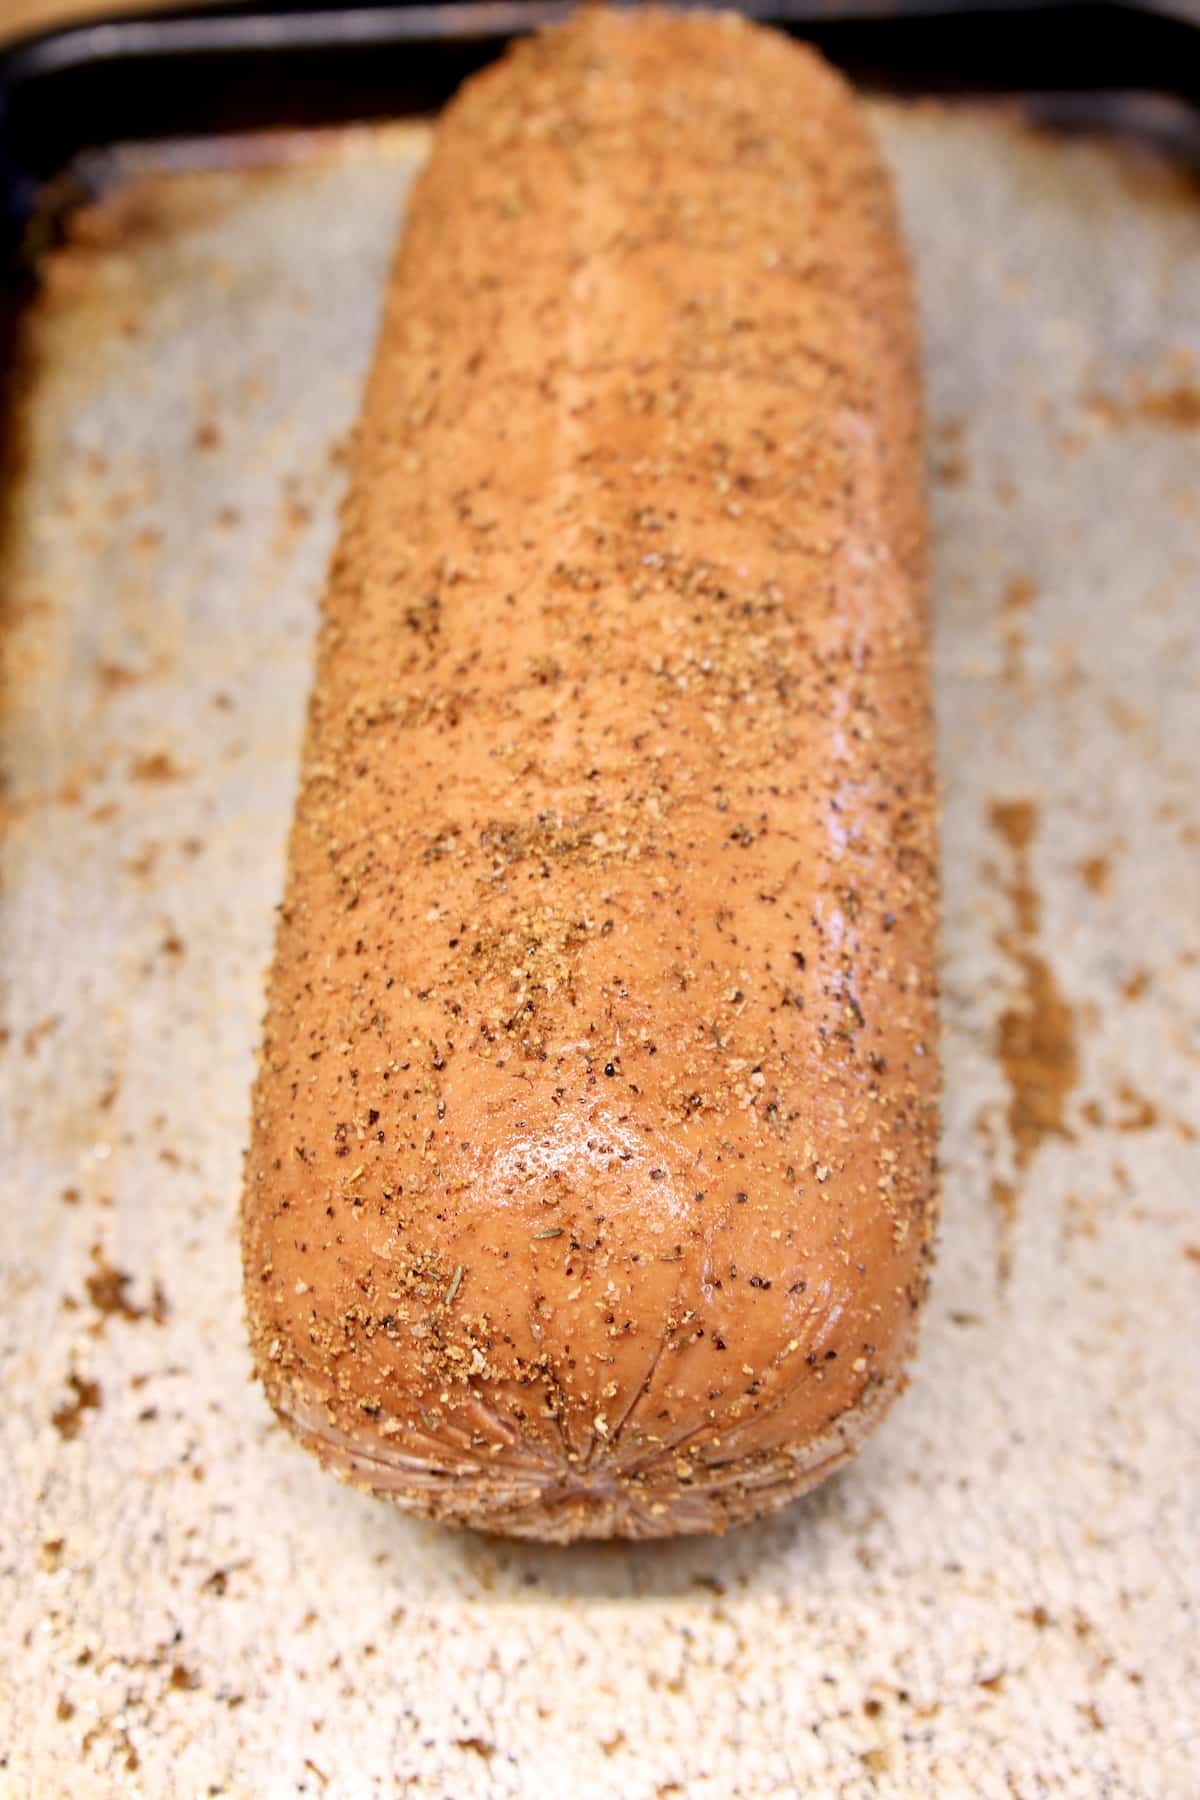 Bologna roll with dry rub.